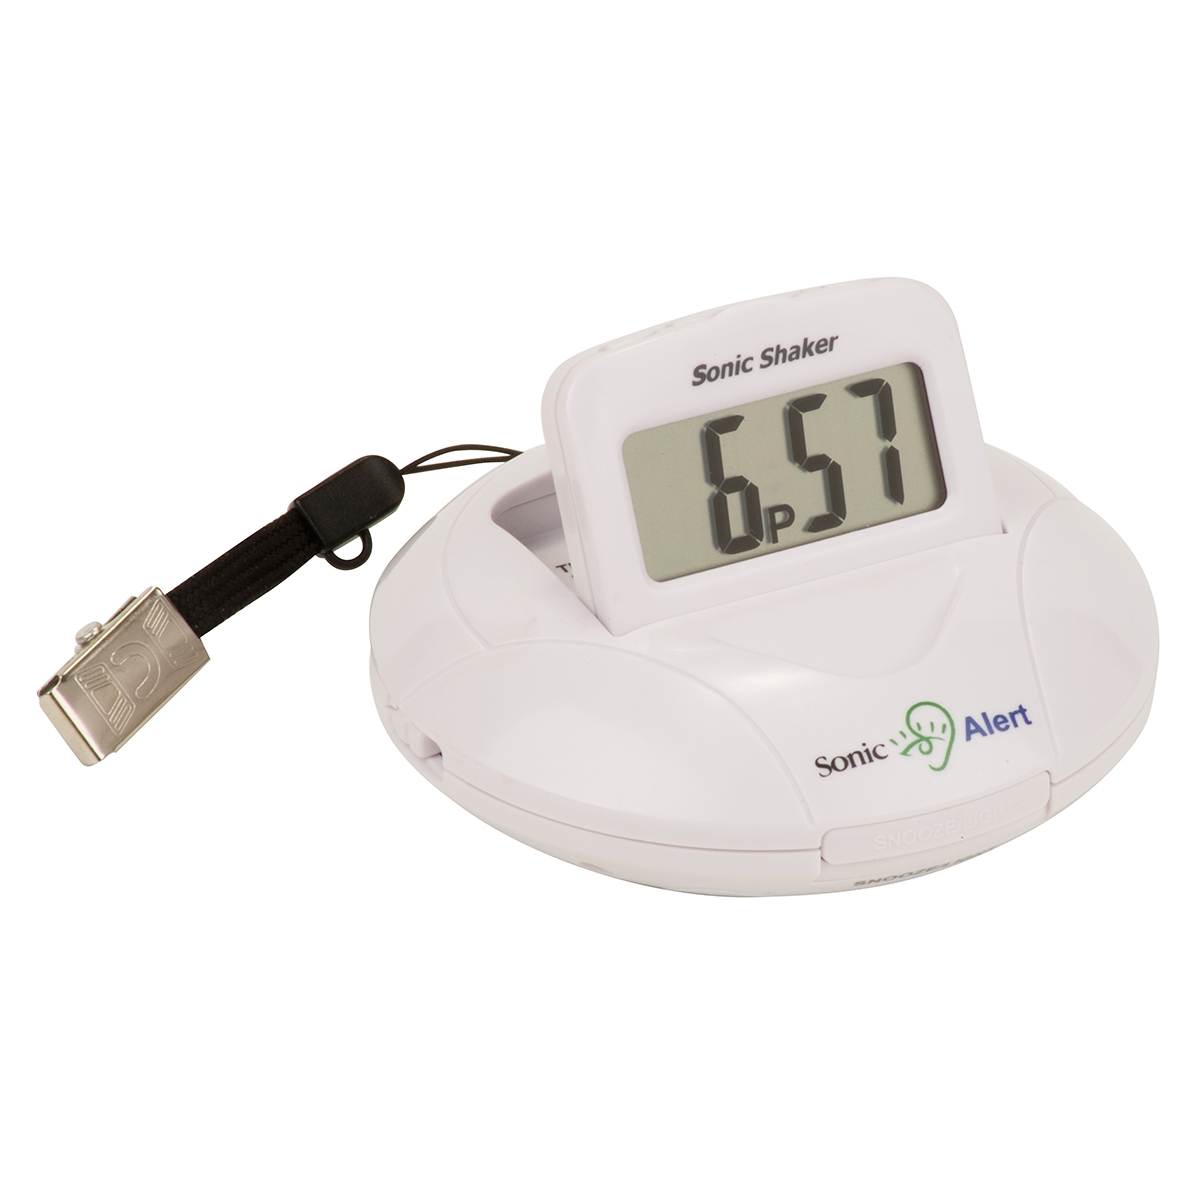 Sonic Shaker SBP100 Portable Alarm Clock